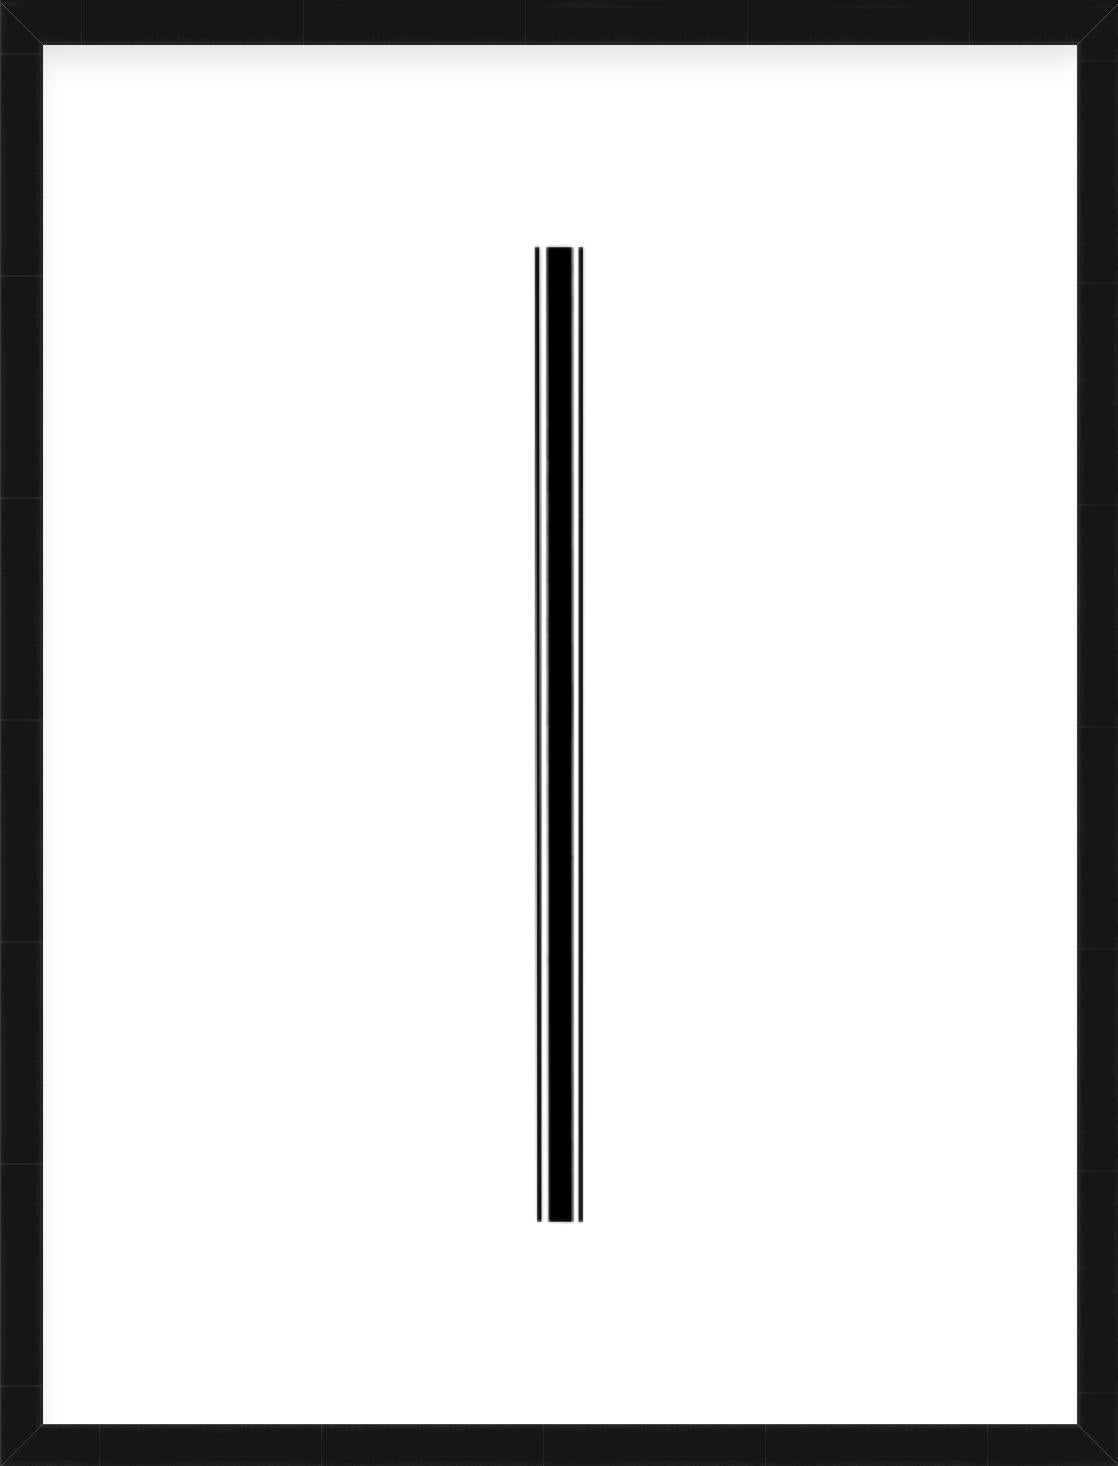 Pletneva Abstract Print - "Trio" - minimalistic digital print